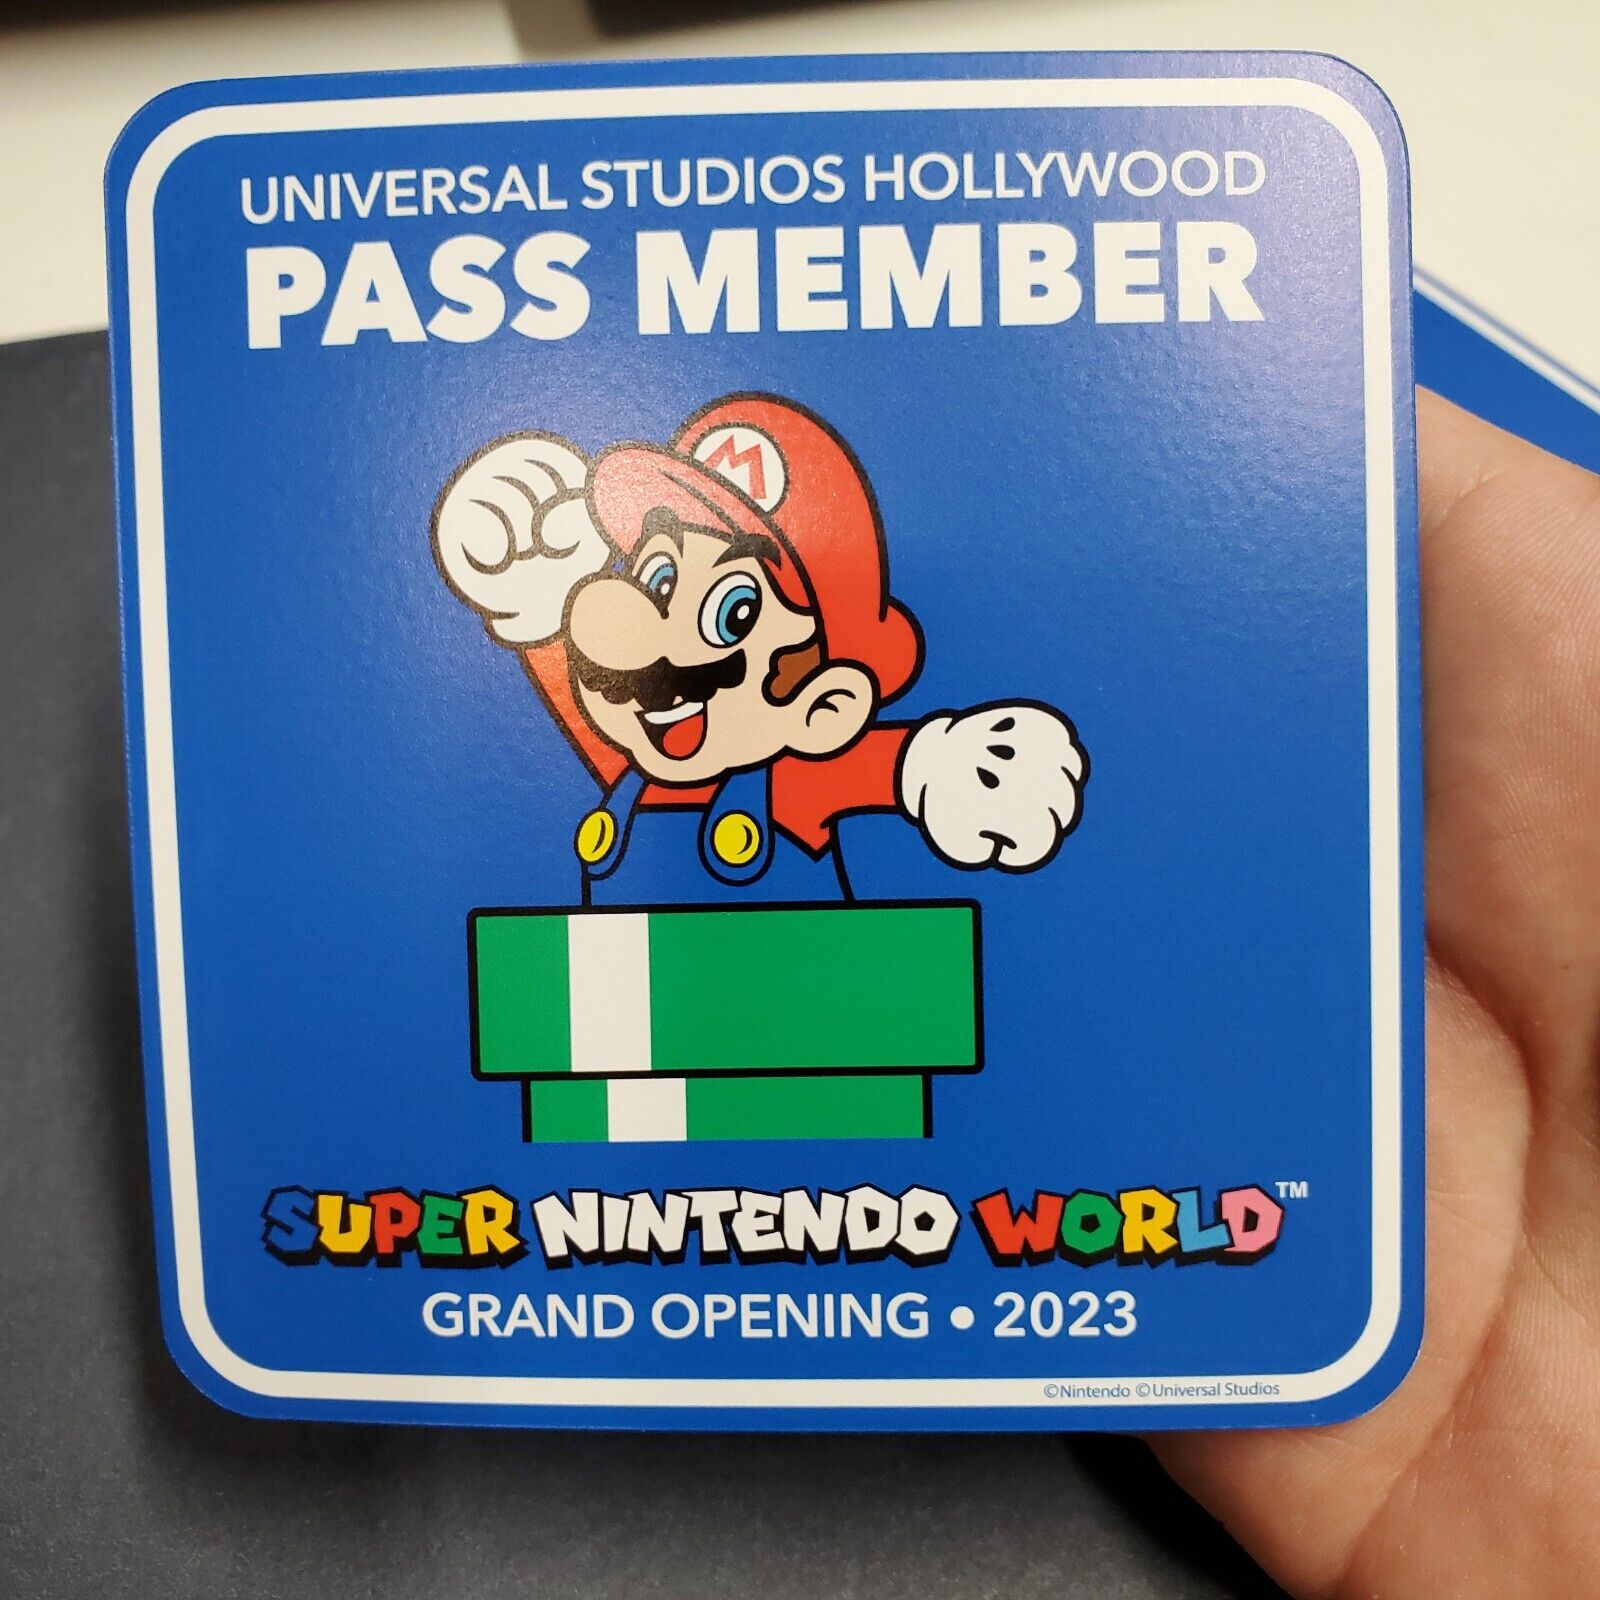 Super Mario World Grand Opening Magnet Universal Studios Hollywood 2023 (Copy)